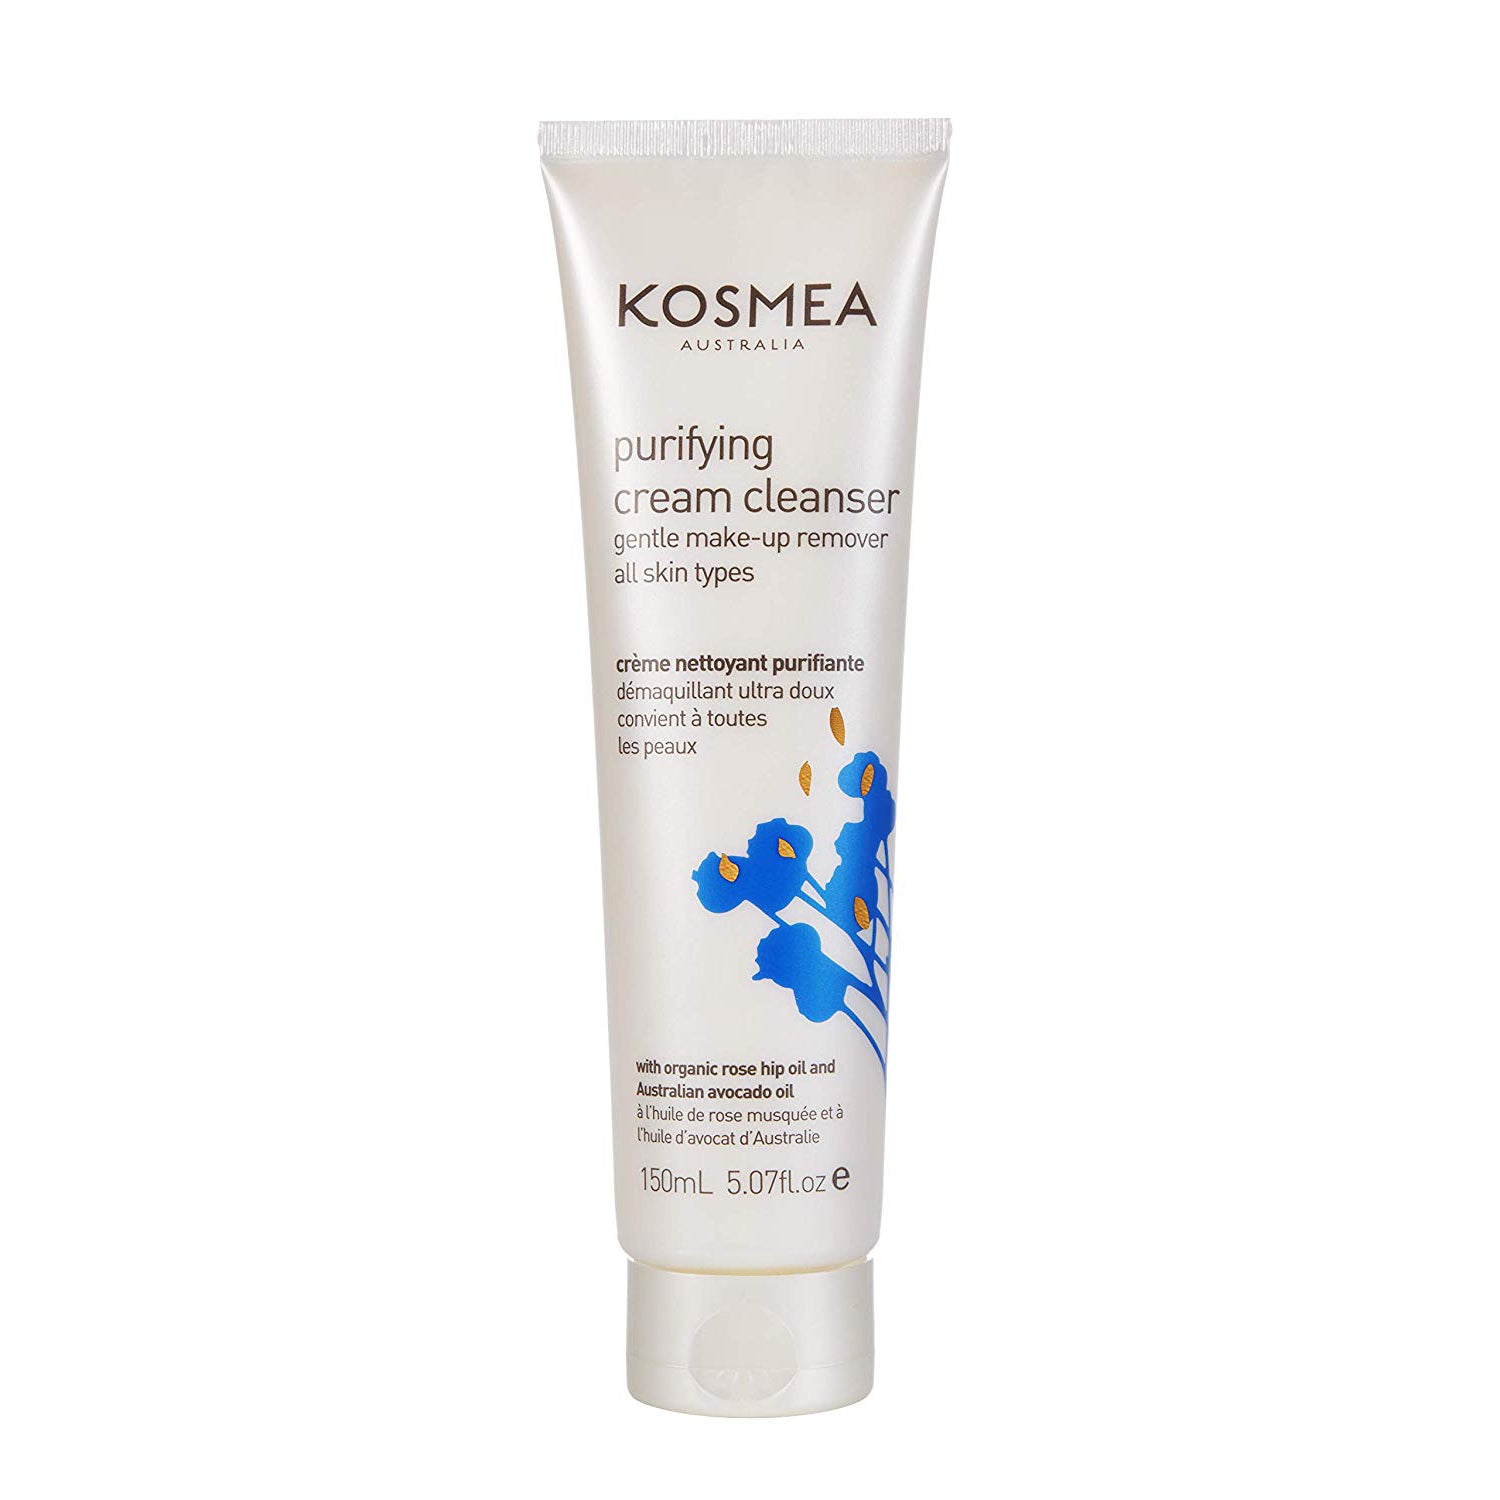 Kosmea Purifying Cream Cleanser 150ml